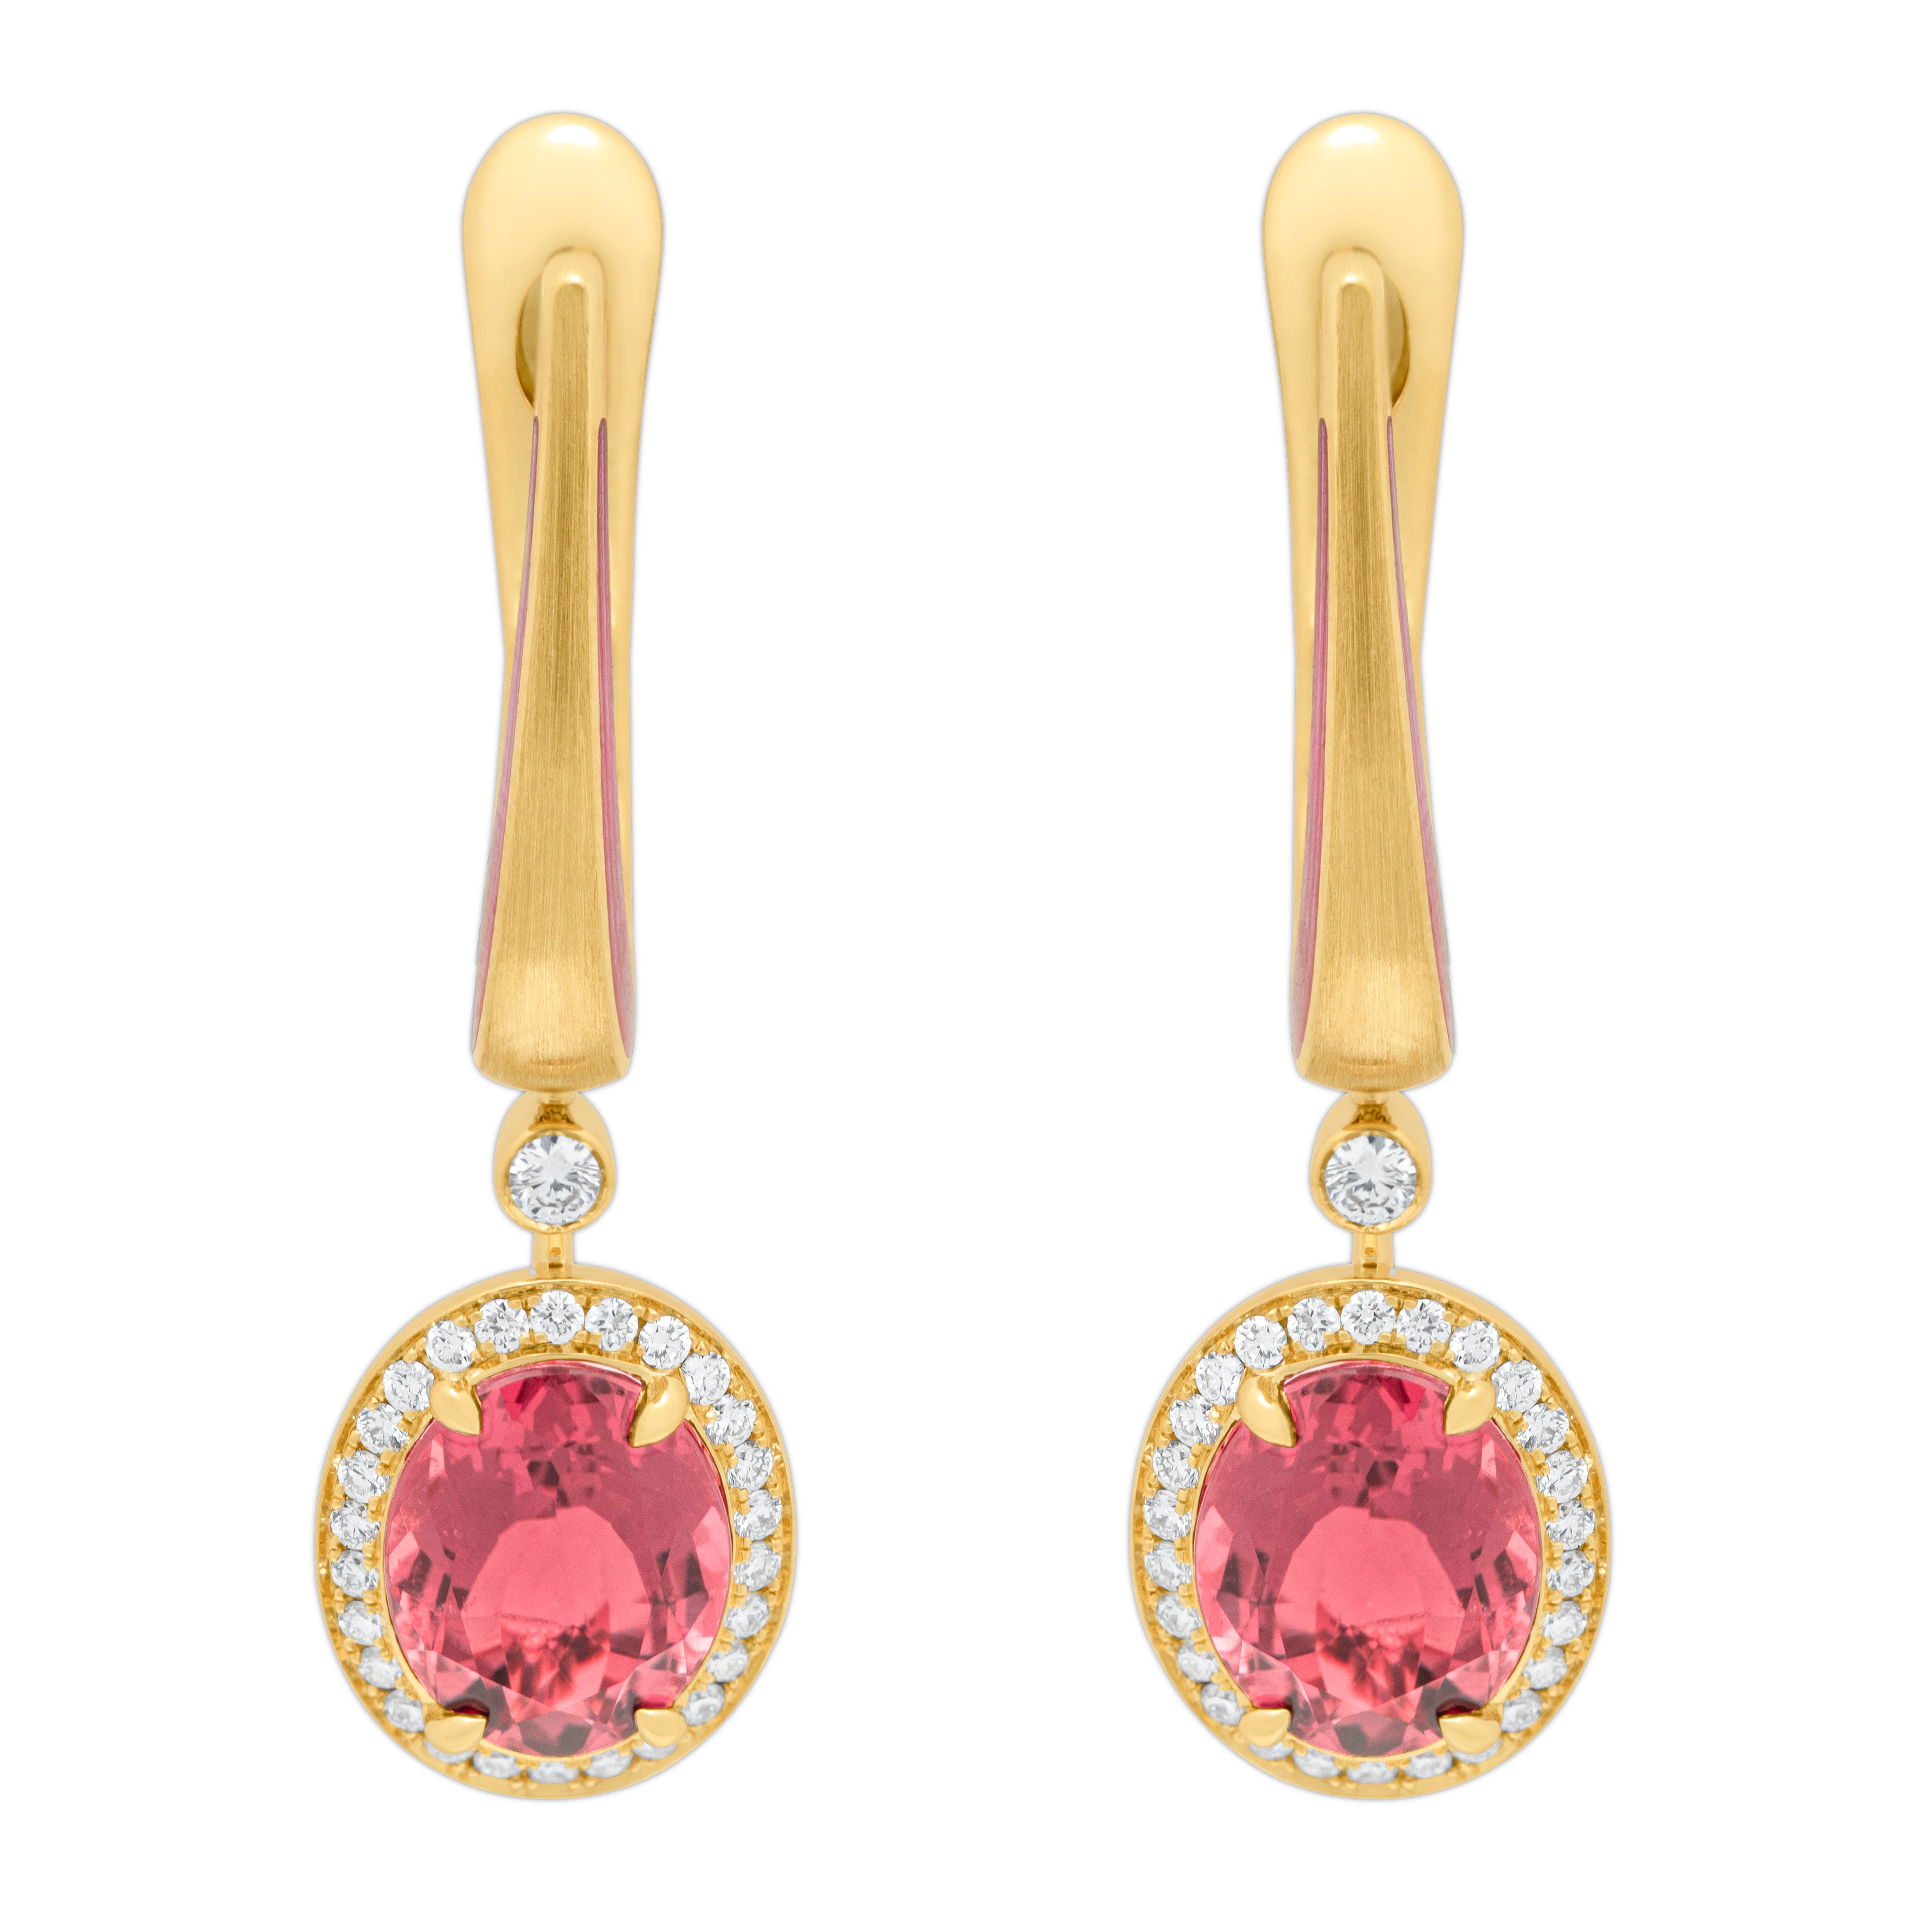 E 0143-02 18K Yellow Gold, Pink Tourmaline, Diamonds Earrings